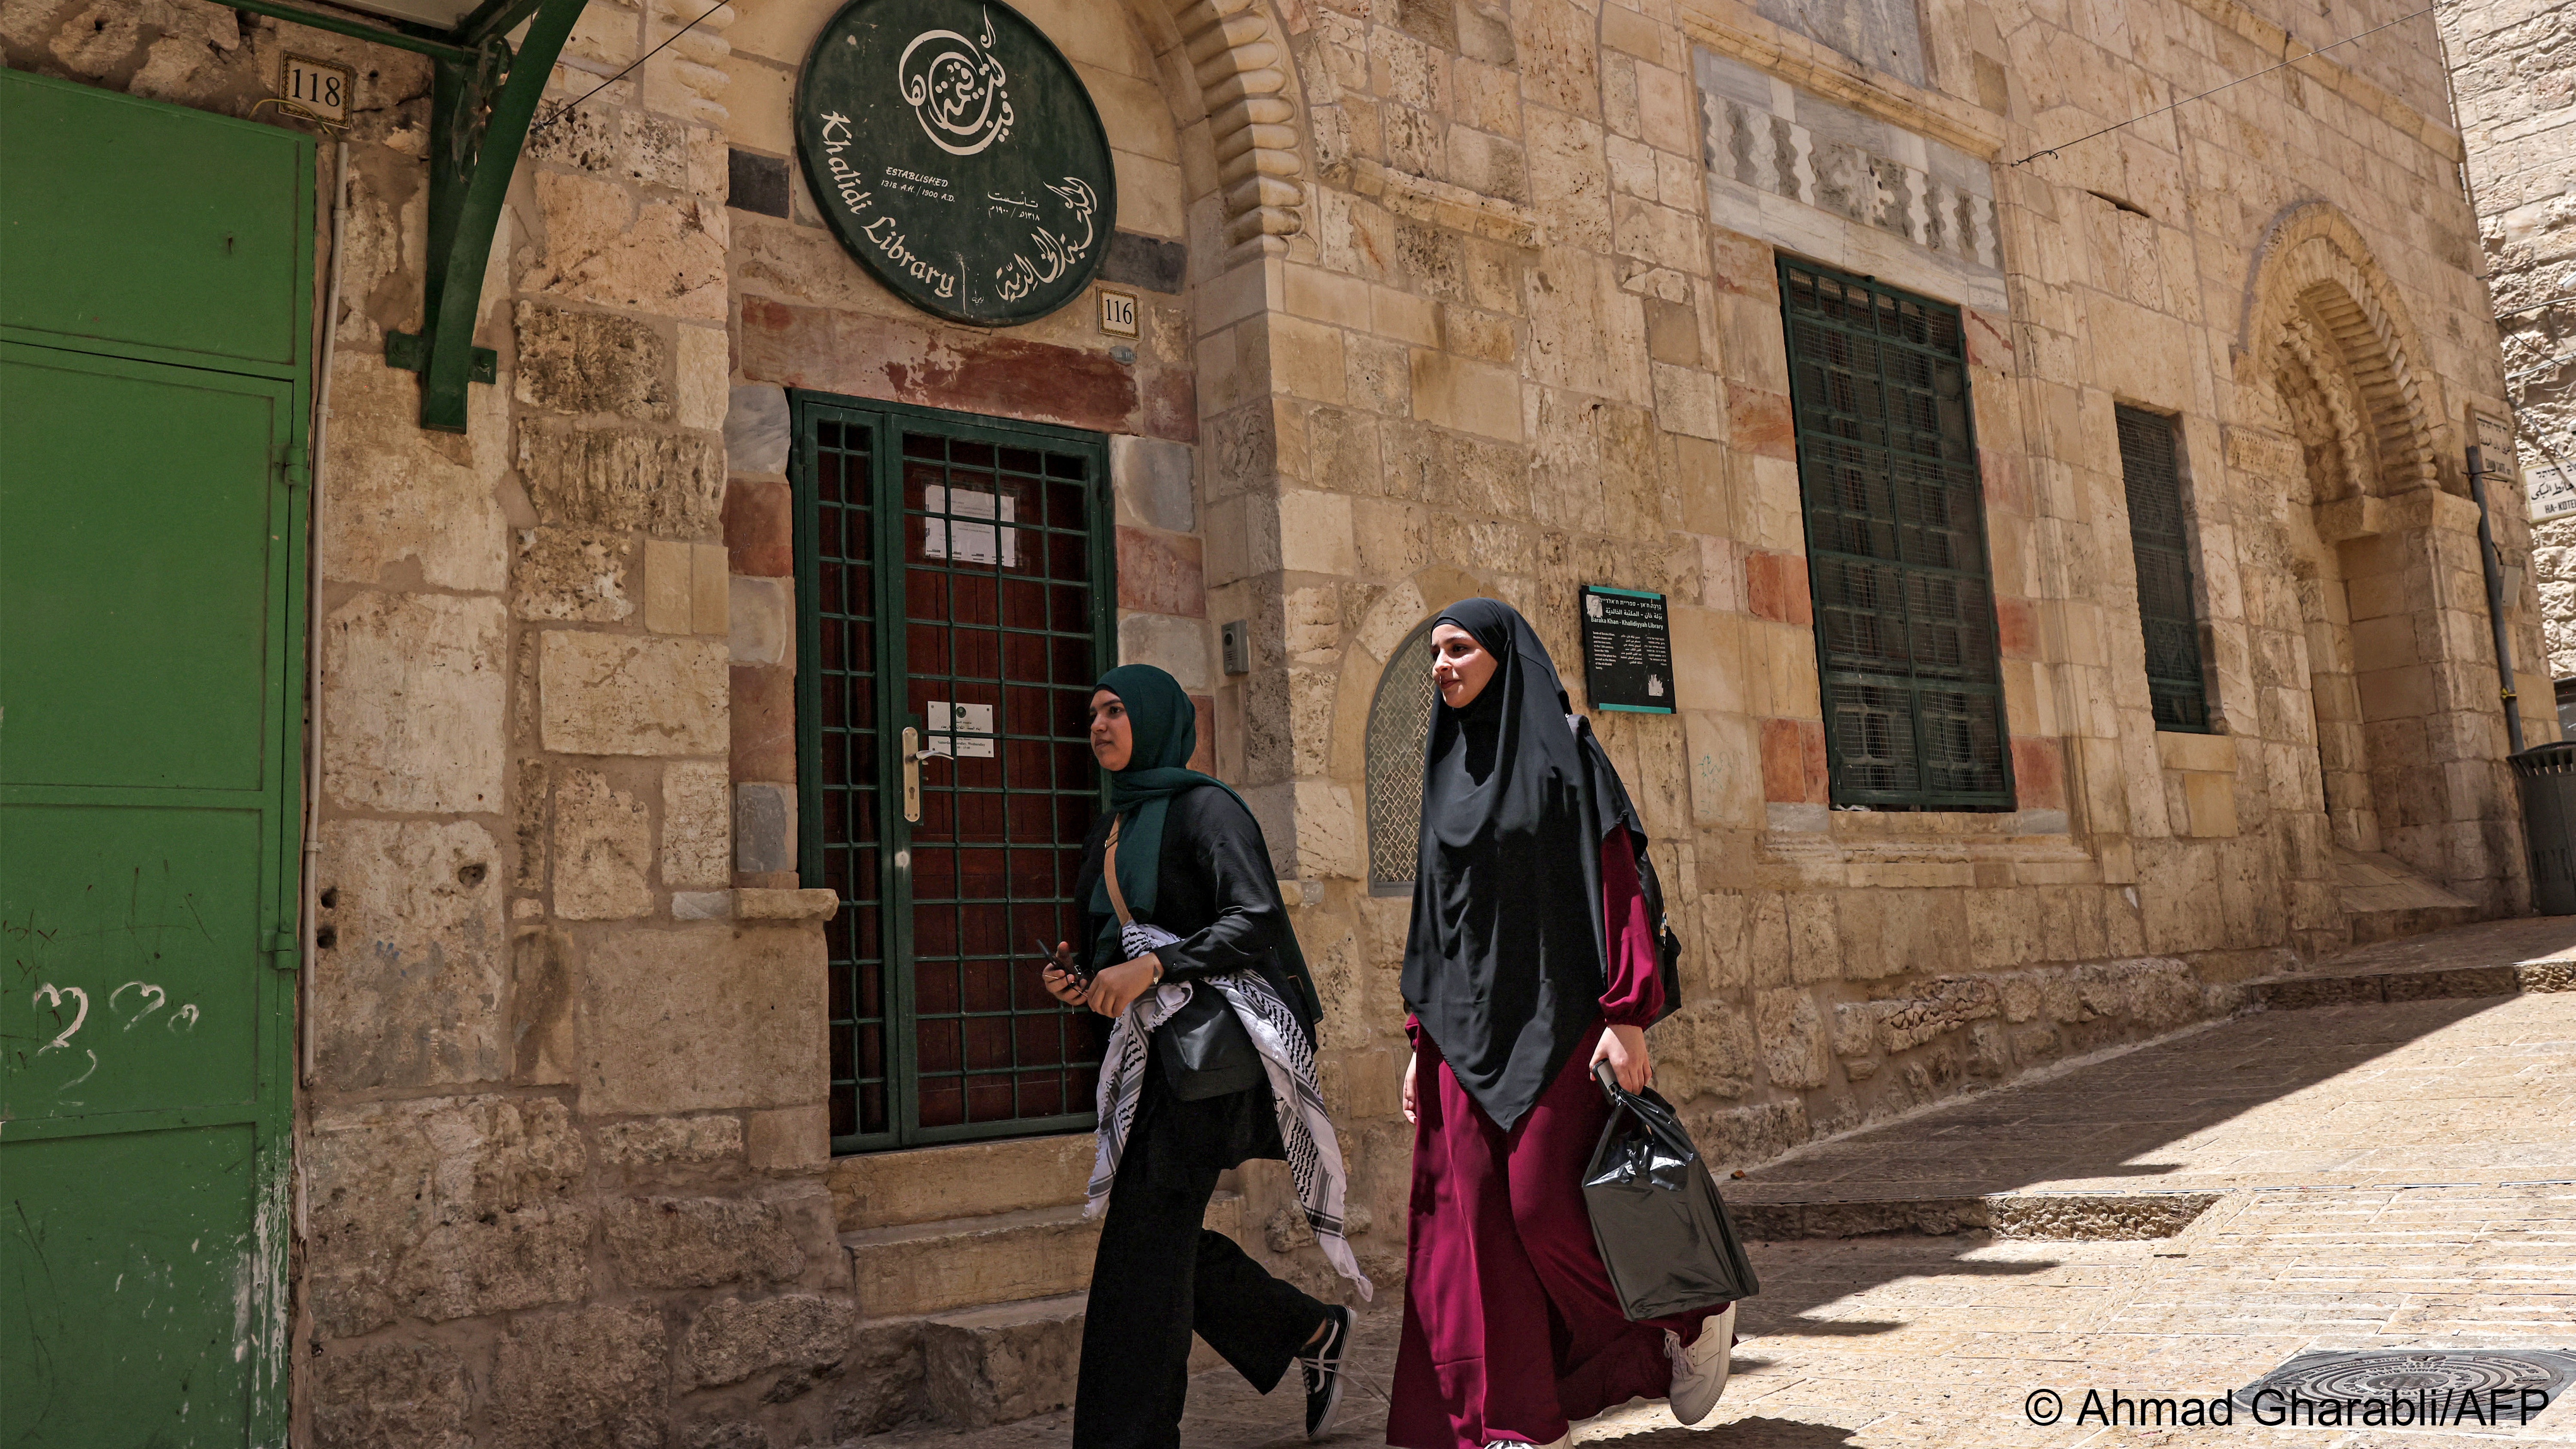 The Khalidi library in the Old City of Jerusalem (image: AHMAD GHARABLI/AFP)